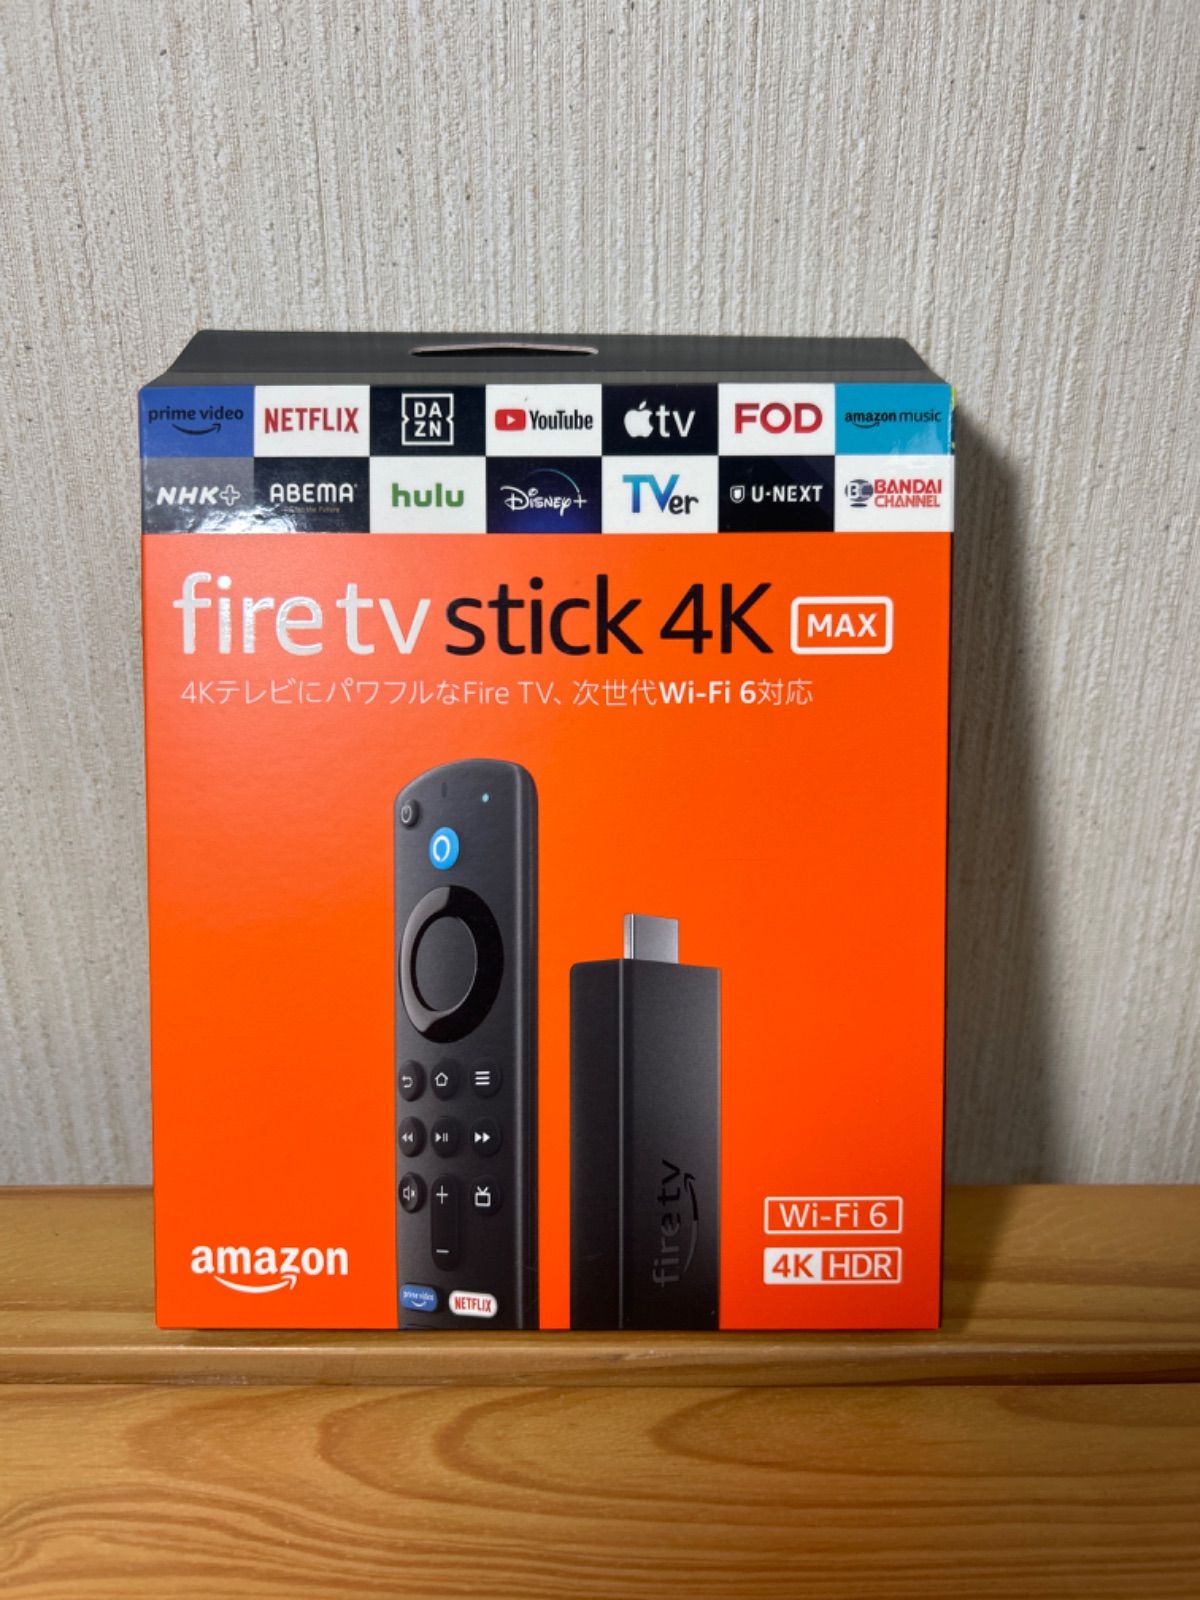  fire tv stick 4K MAX アマゾン